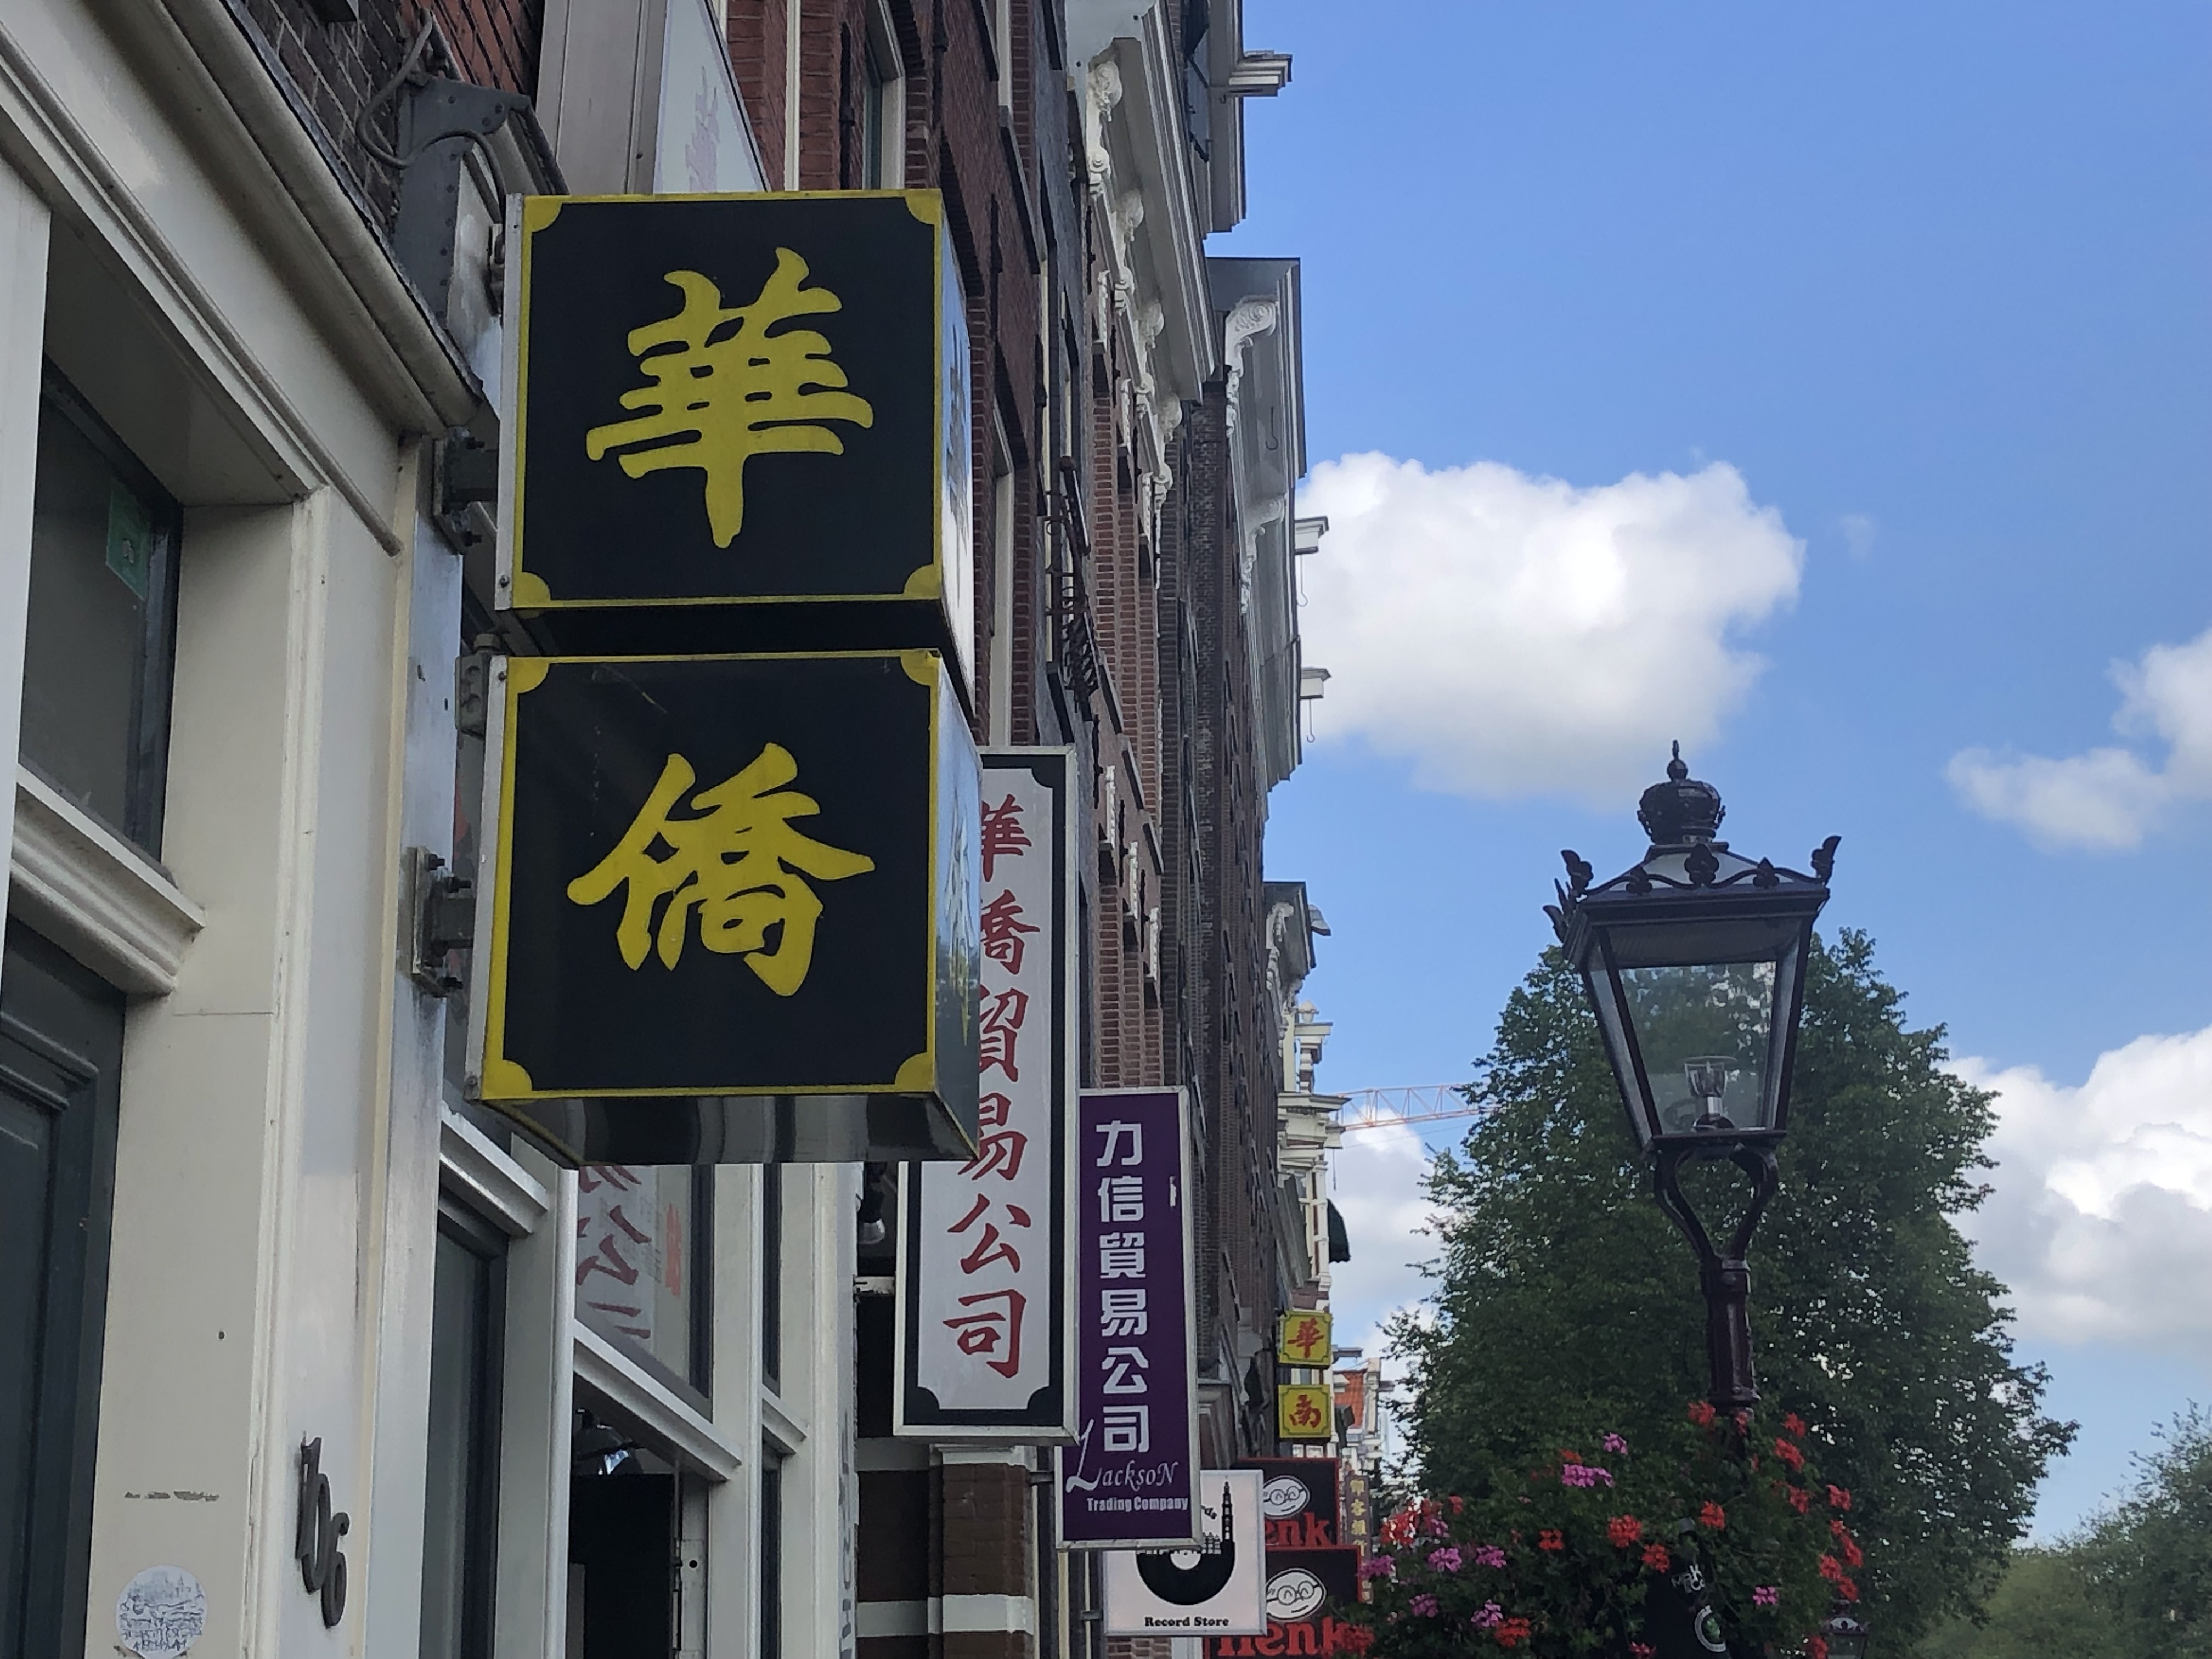 Chinatown d’Amsterdam